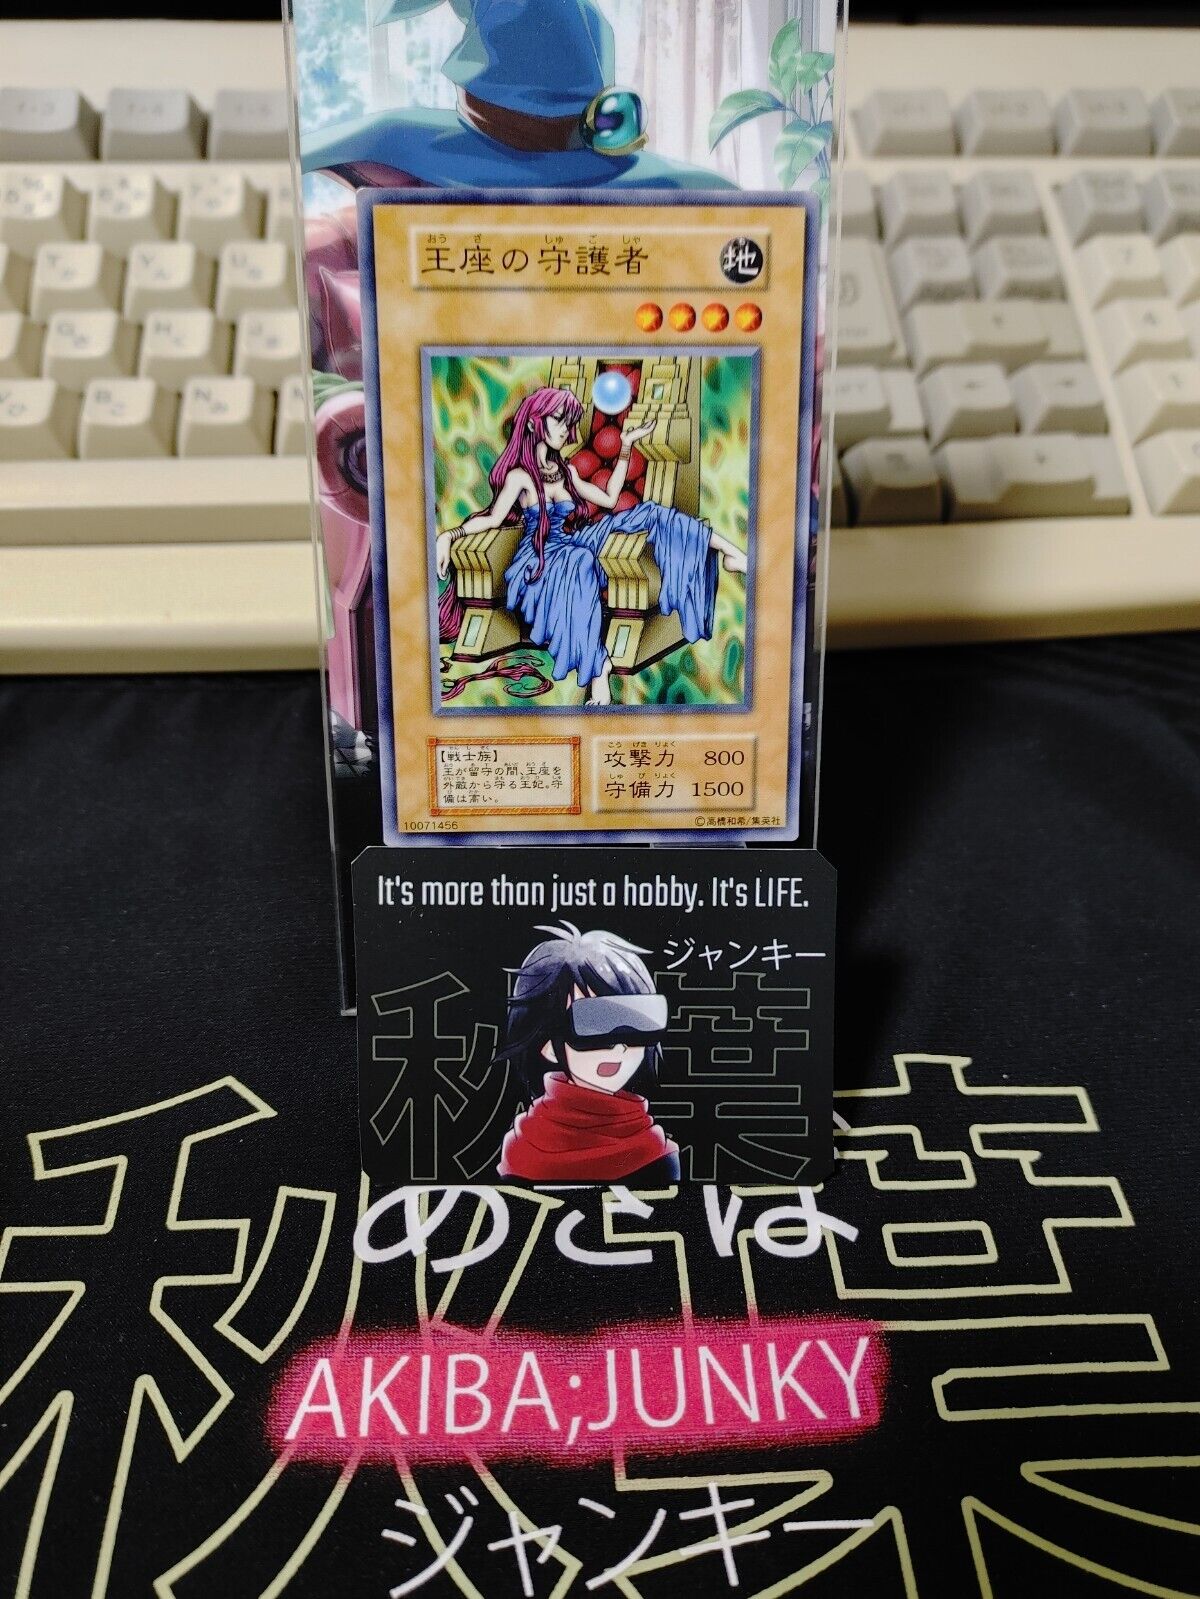 Protector of the Throne Yu-Gi-Oh Yugioh Retro Card Original UNCENSORED JAPAN